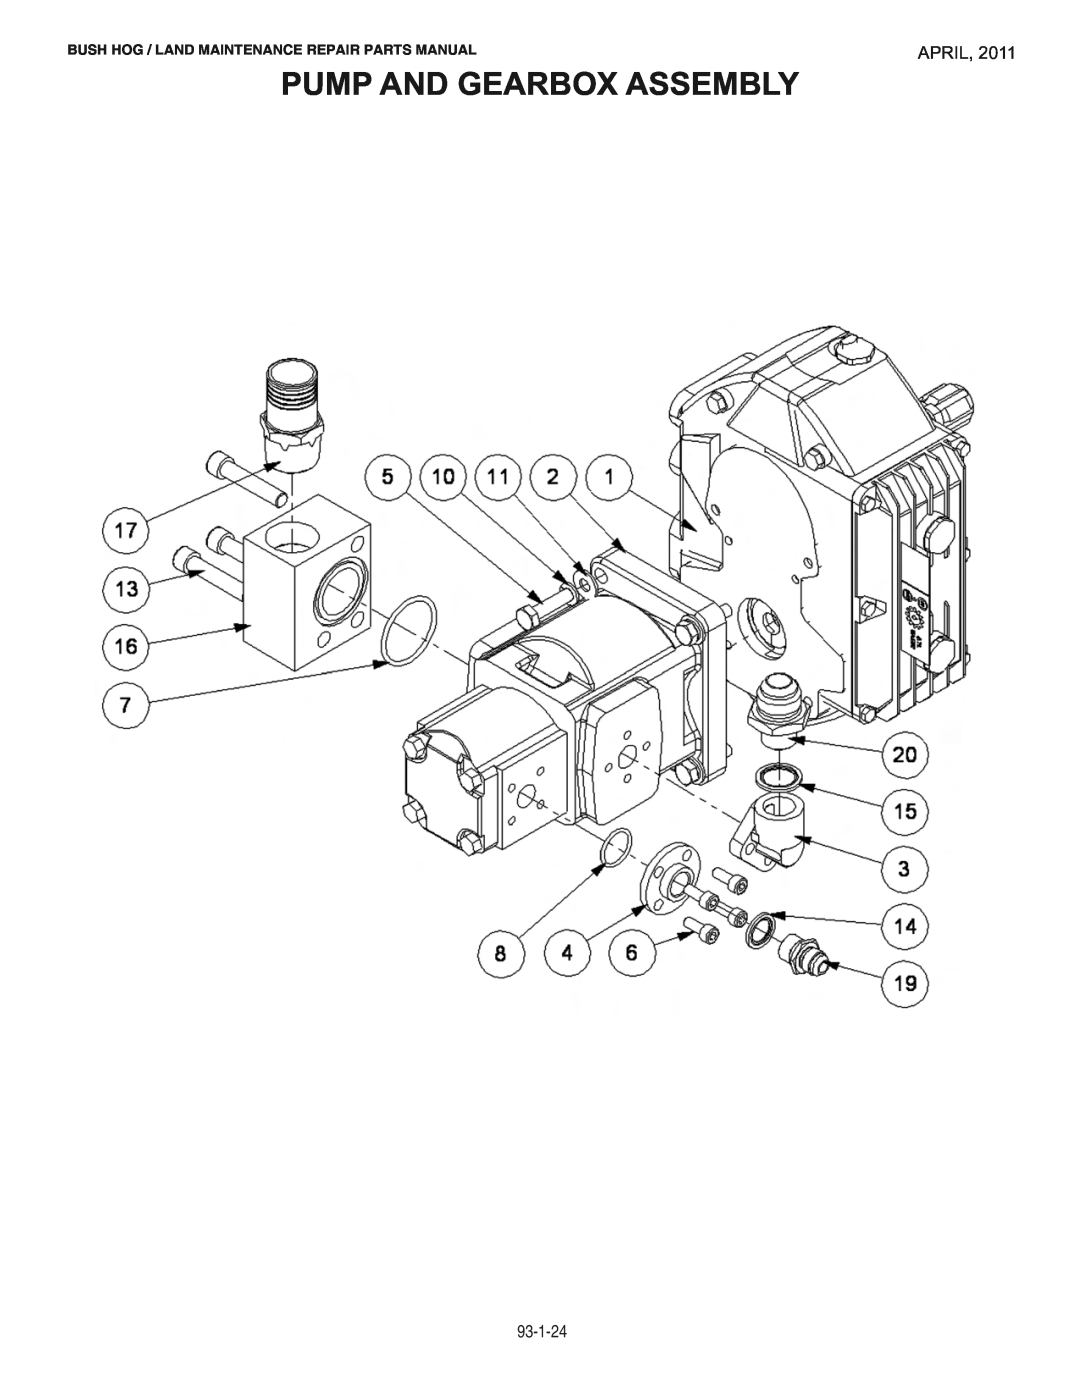 Bush Hog RMB1865E manual Pump And Gearbox Assembly, April, Bush Hog / Land Maintenance Repair Parts Manual 